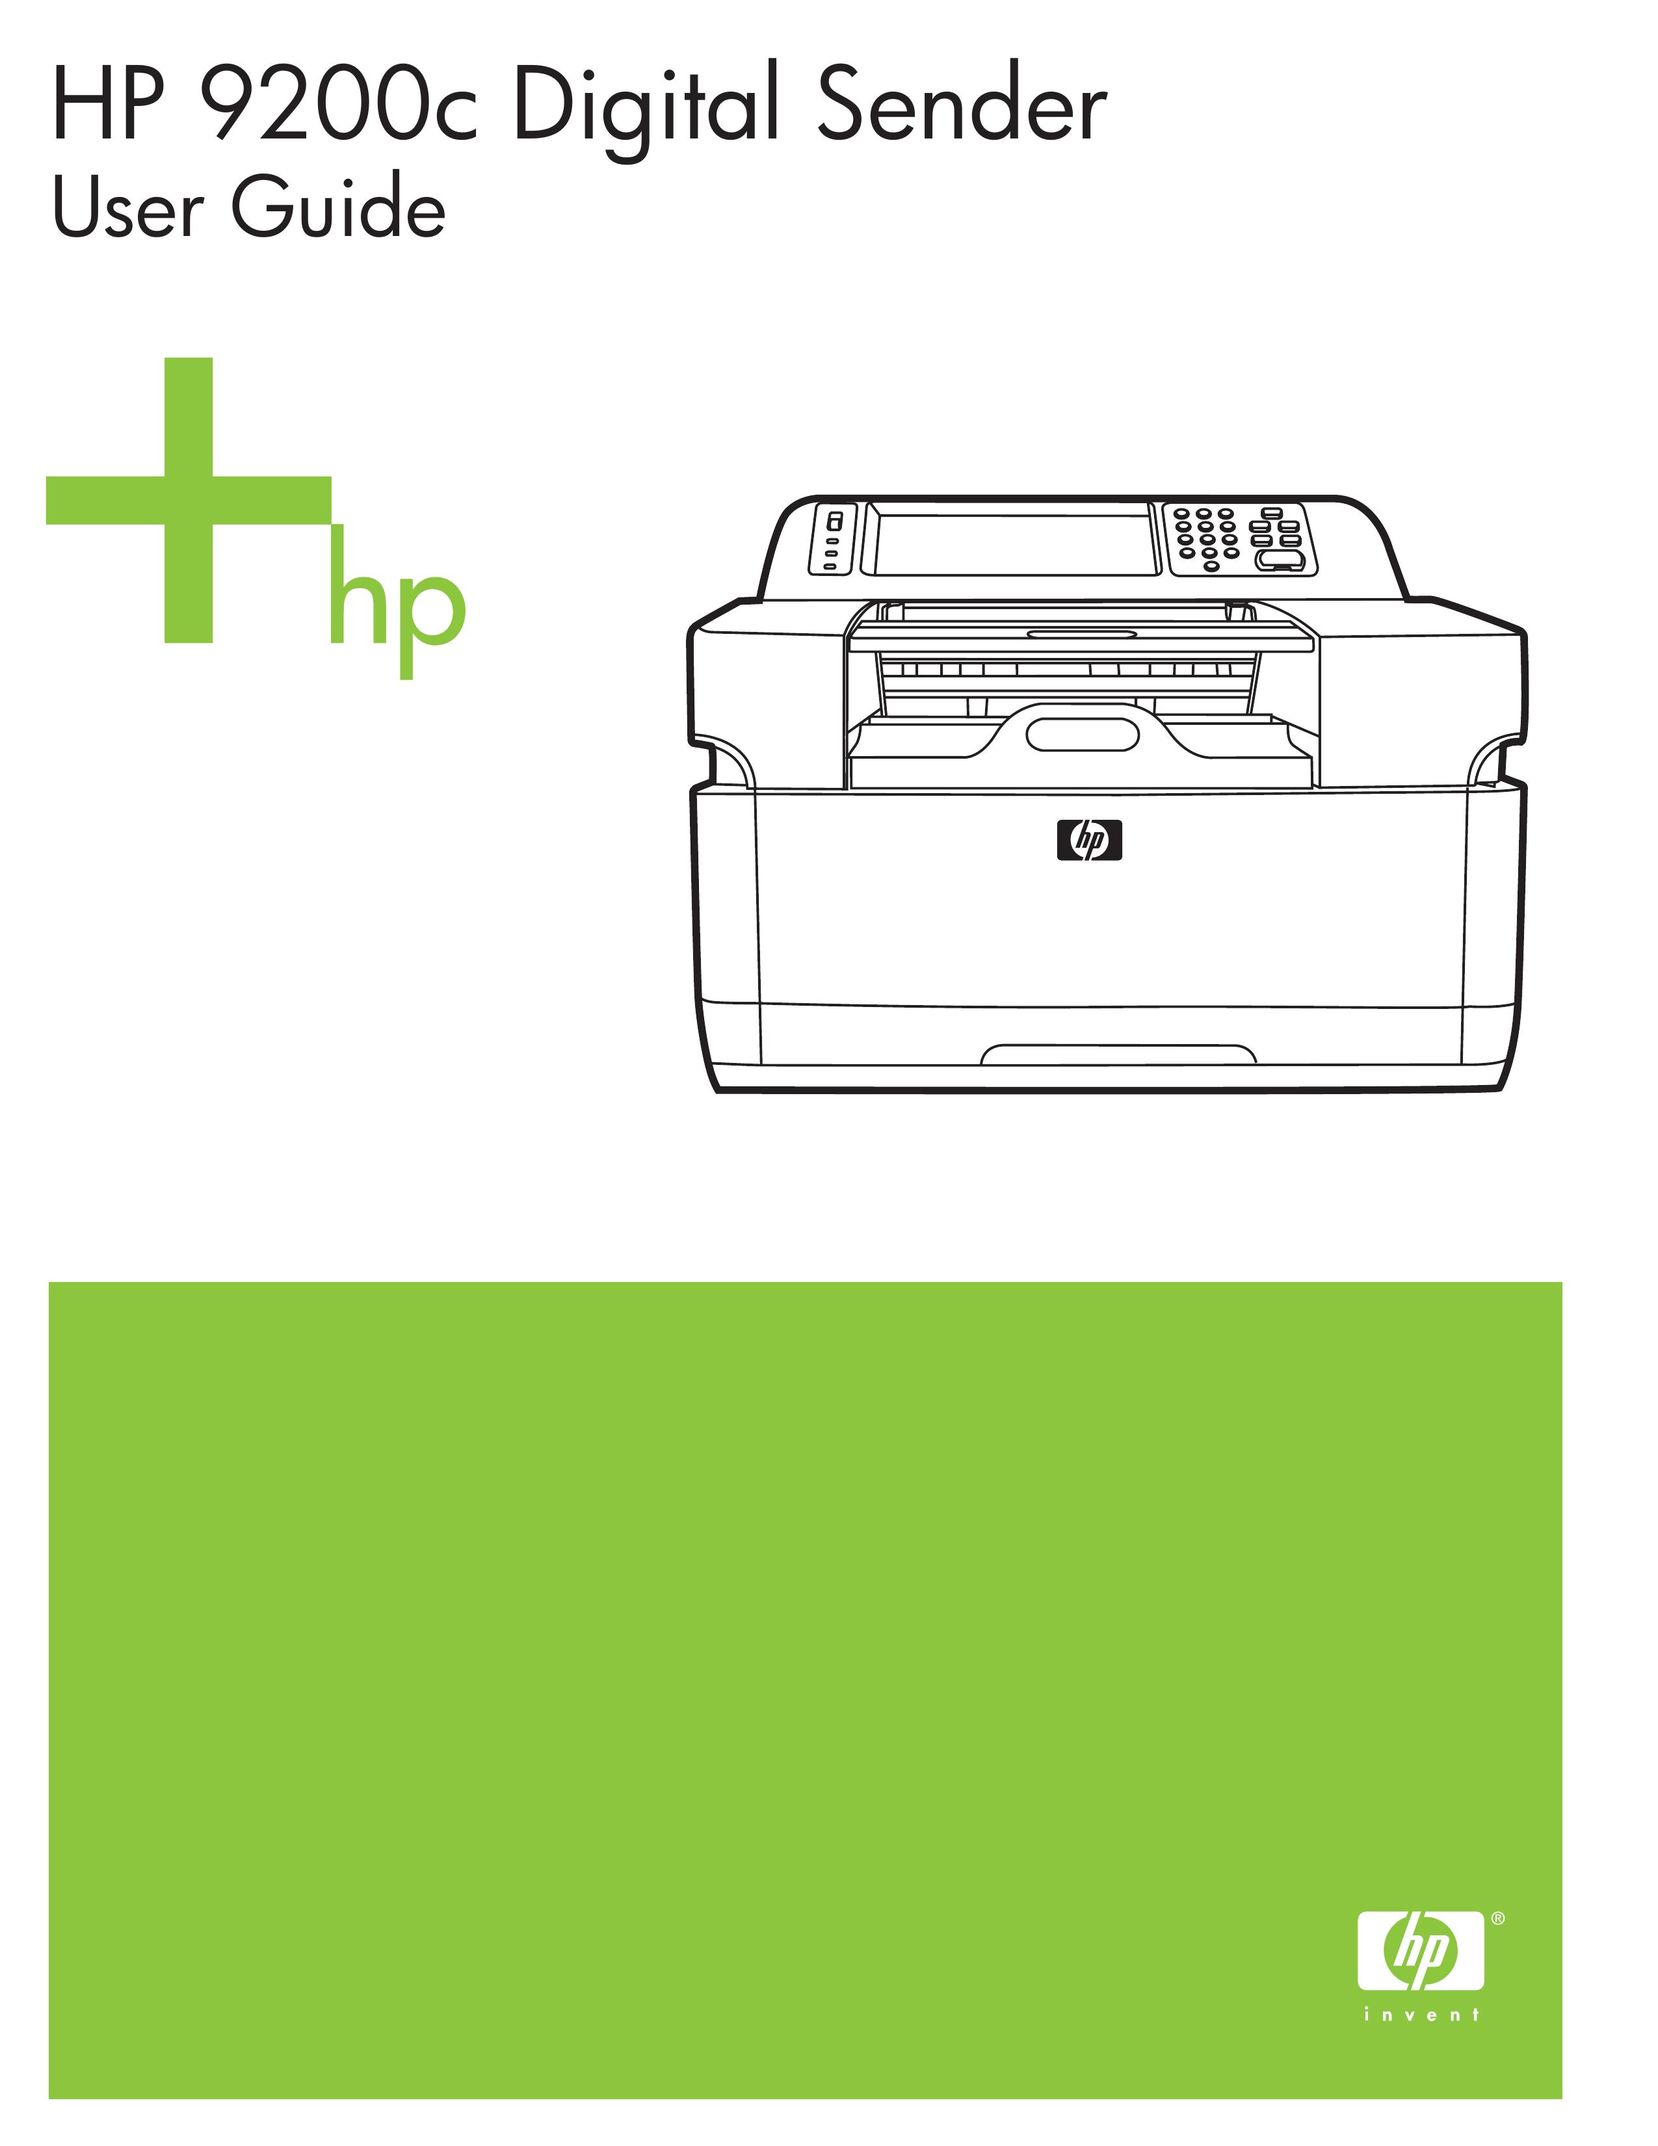 Compaq 9200c All in One Printer User Manual